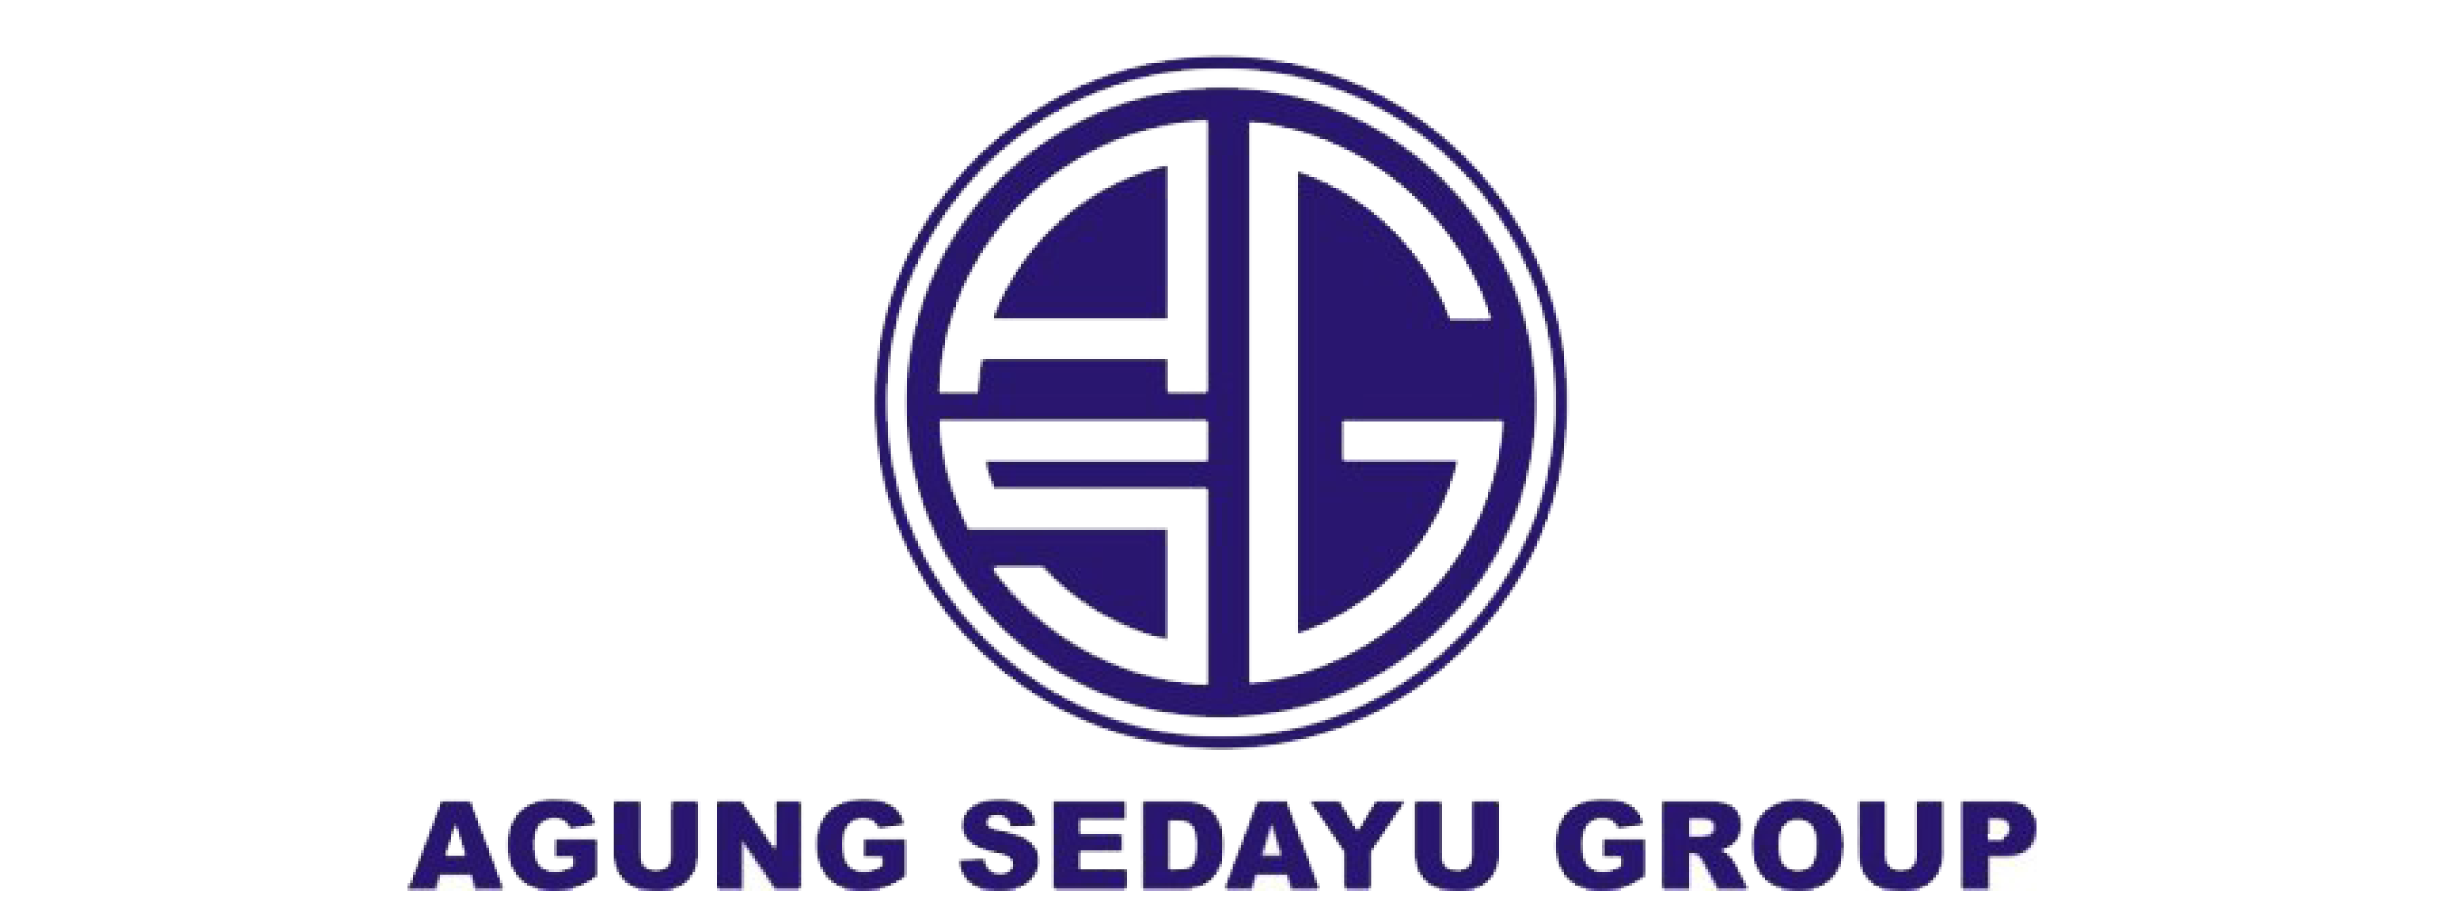 Agung Sedayu Group logo